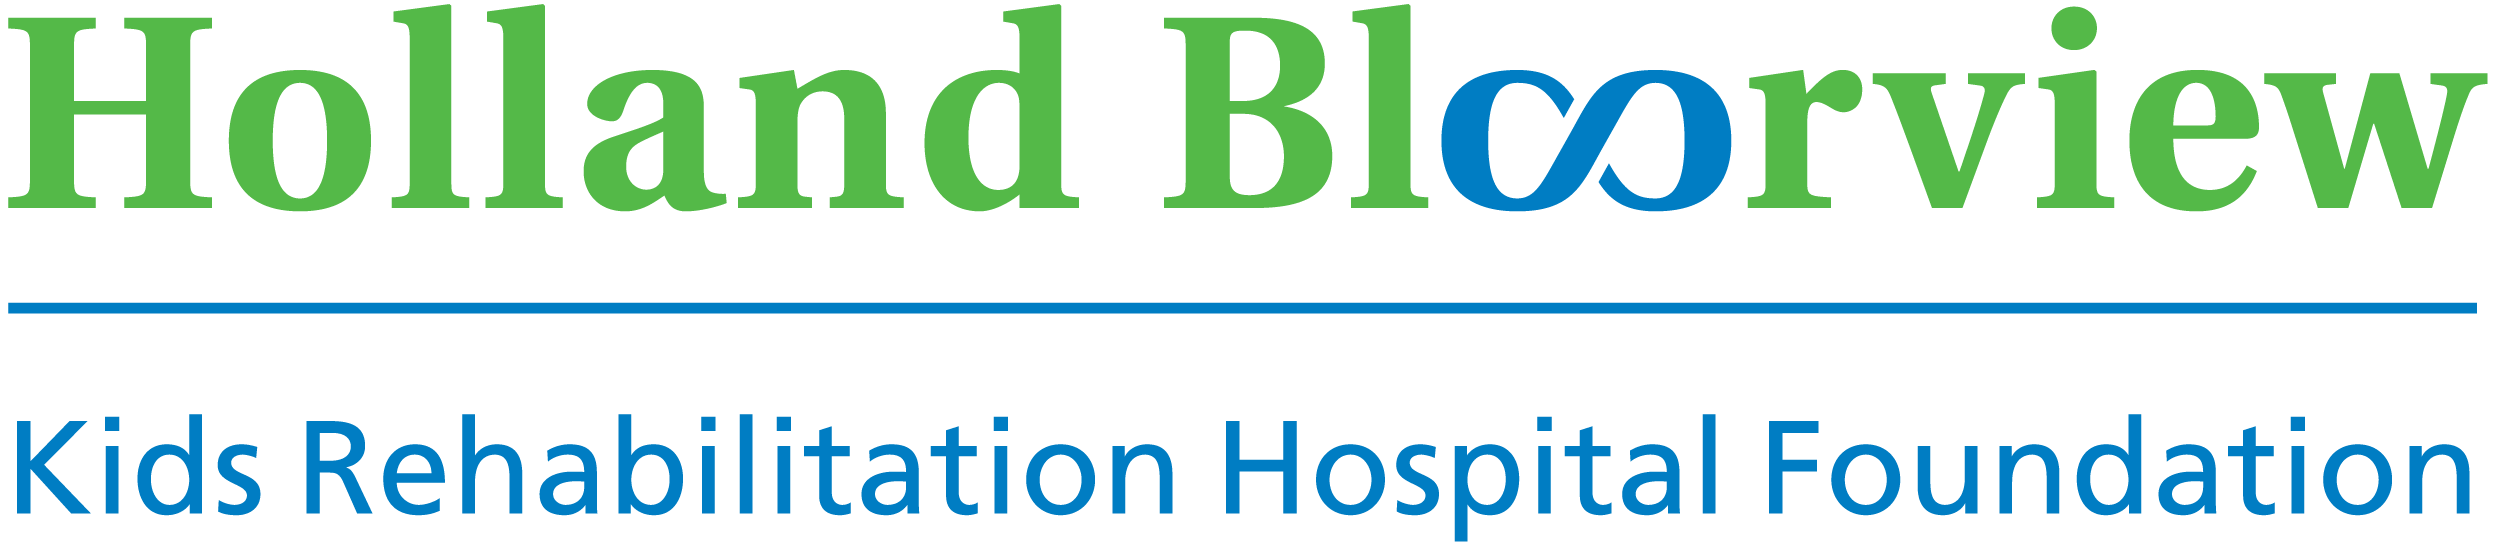 Holland Bloorview header logo